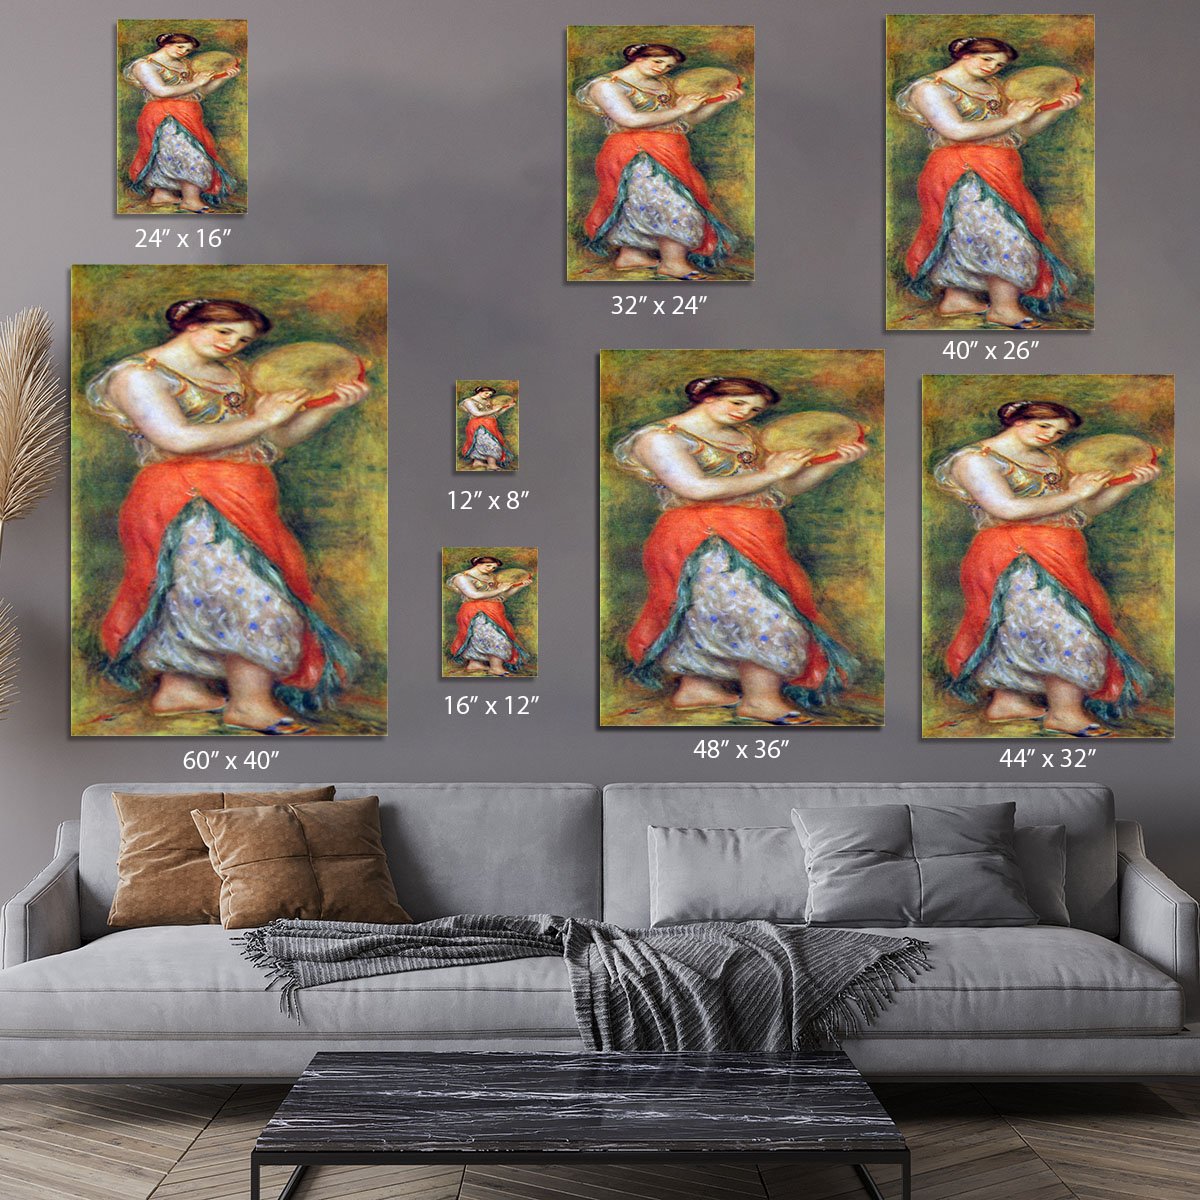 Dancer with tamborine by Renoir Canvas Print or Poster